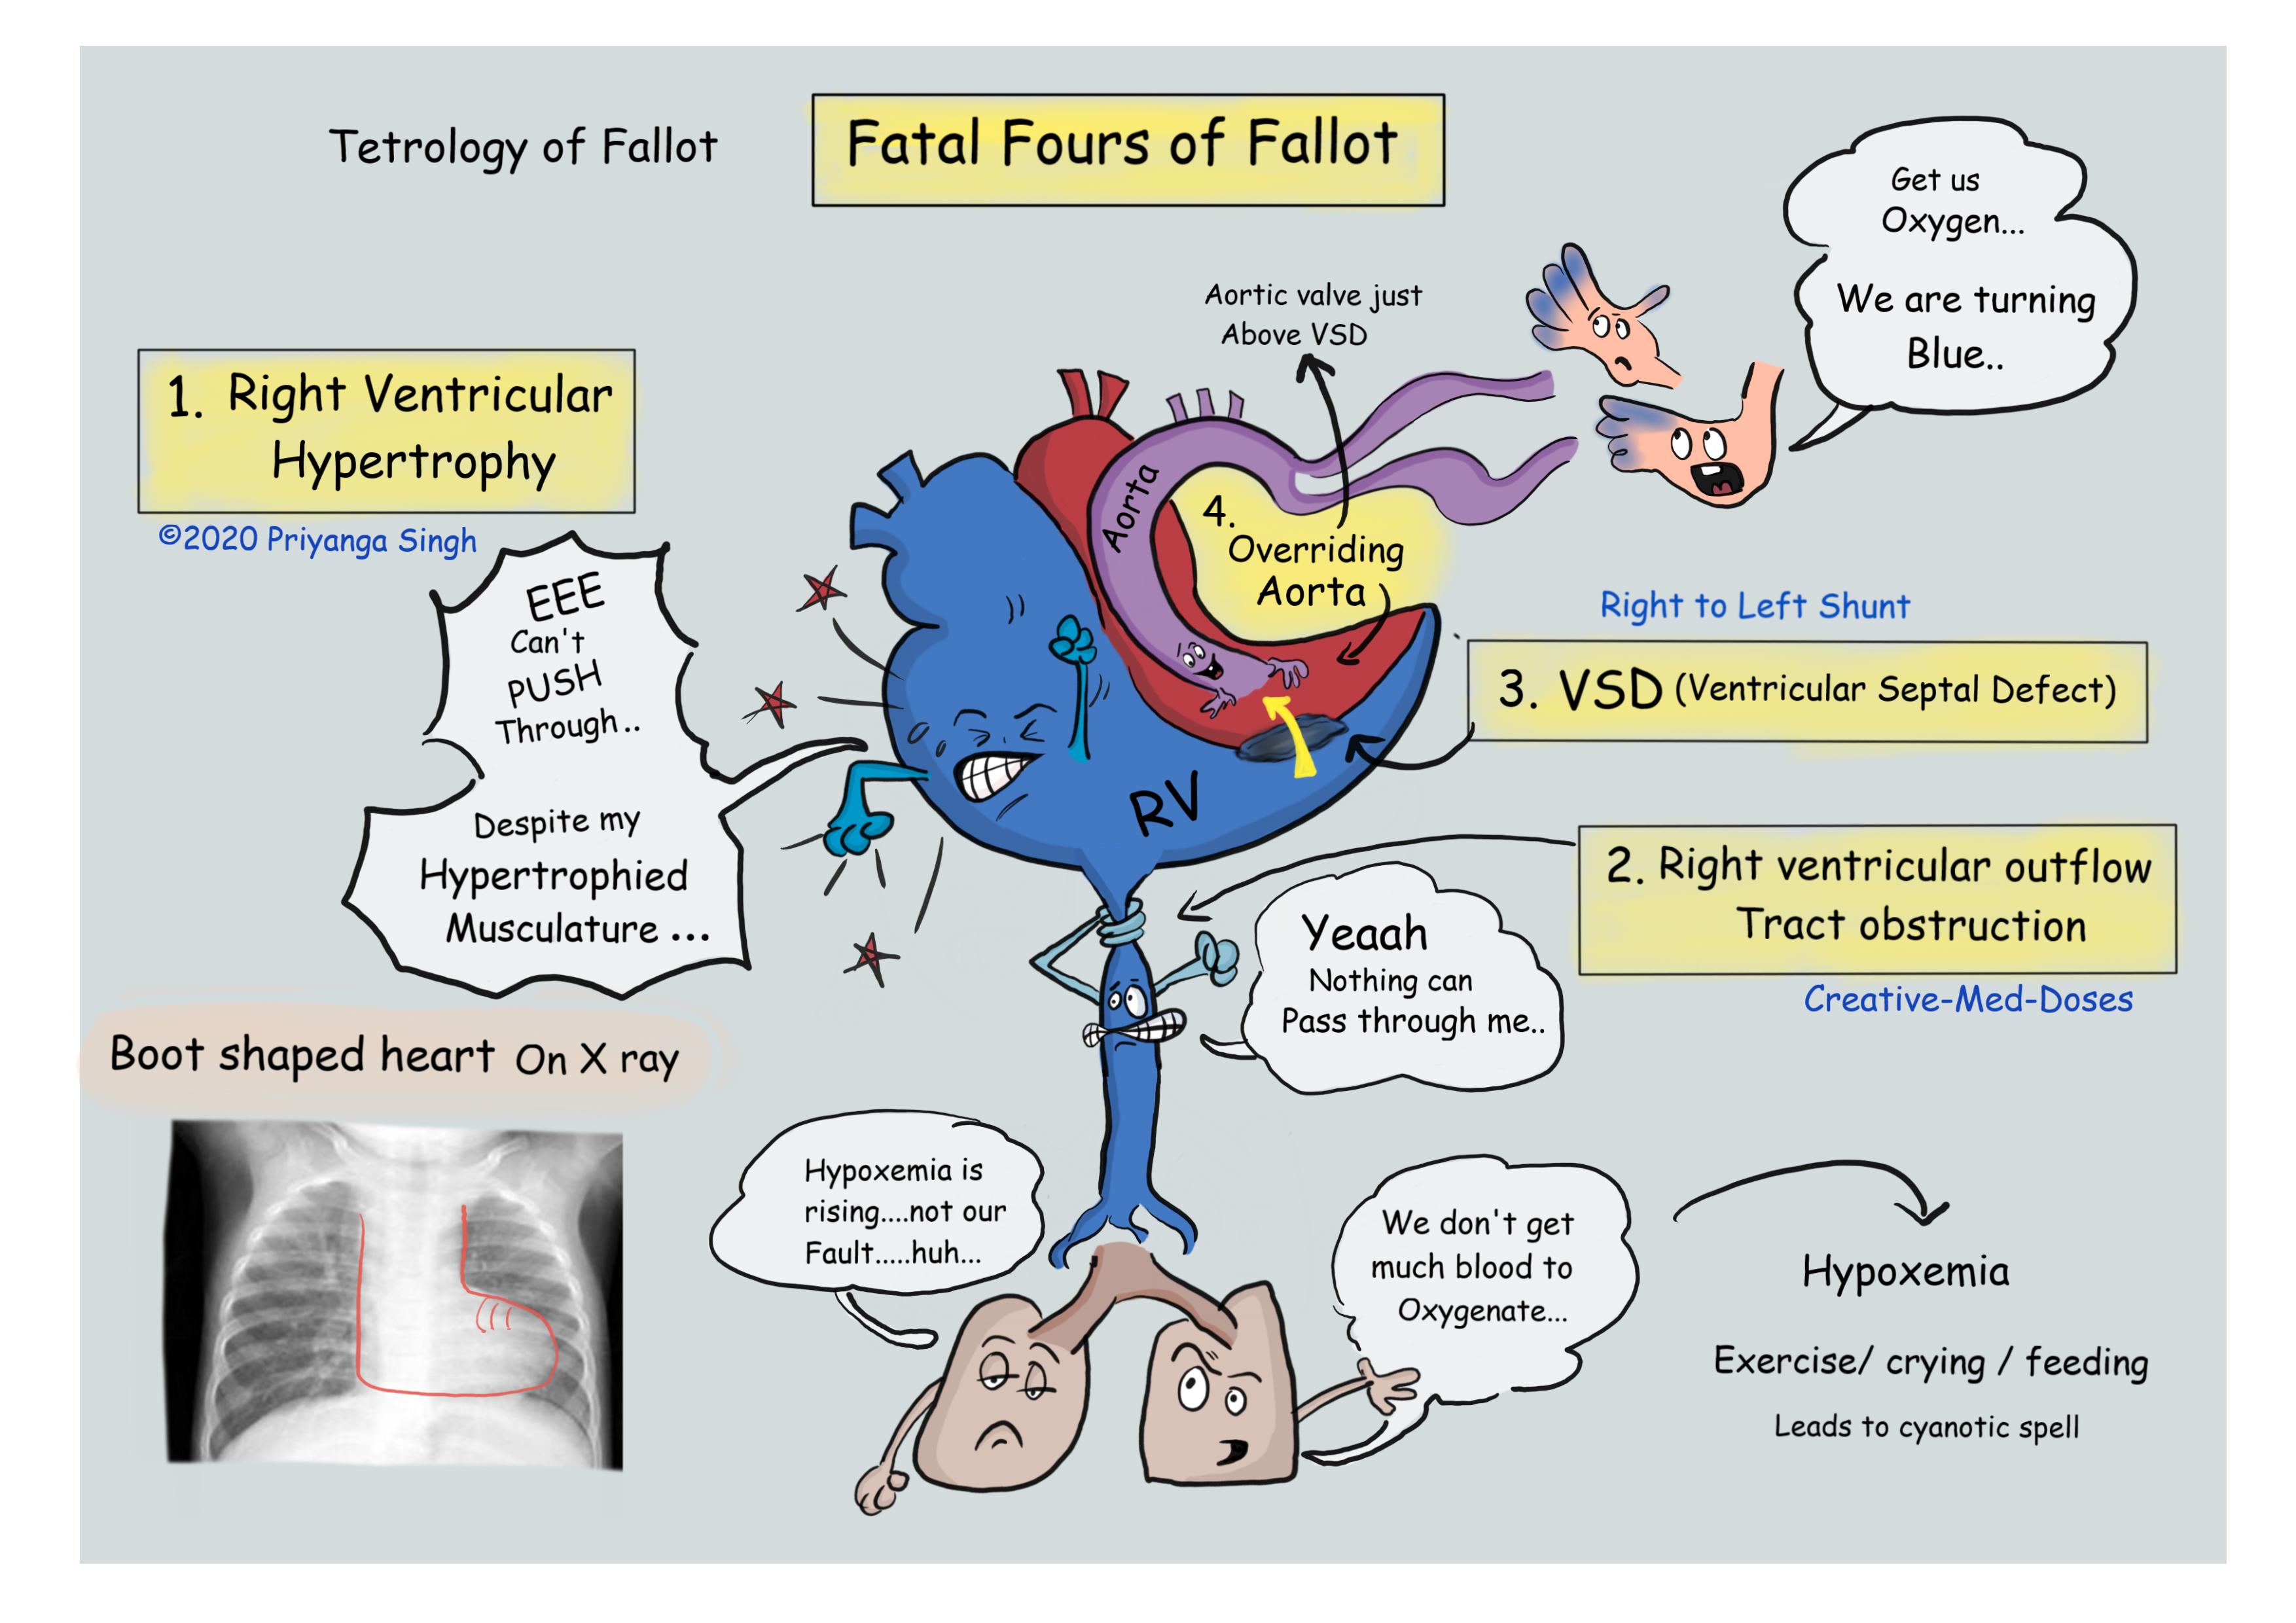 Tetralogy of Fallot: Fatal Four - Creative Med Doses